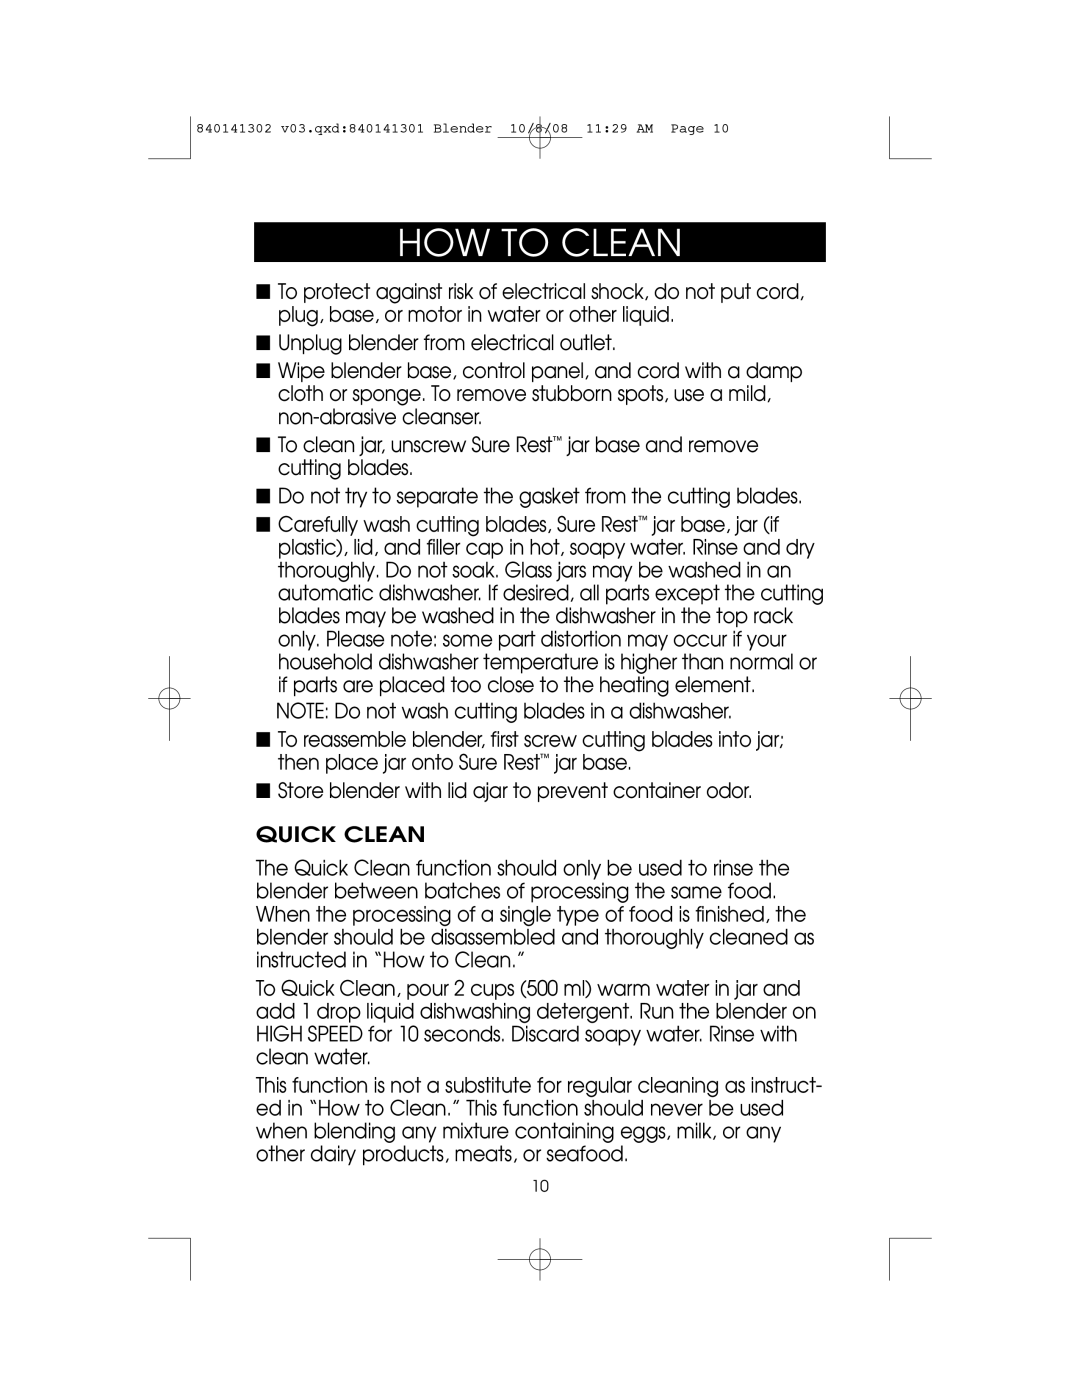 Hamilton Beach 840141302 owner manual How To Clean 